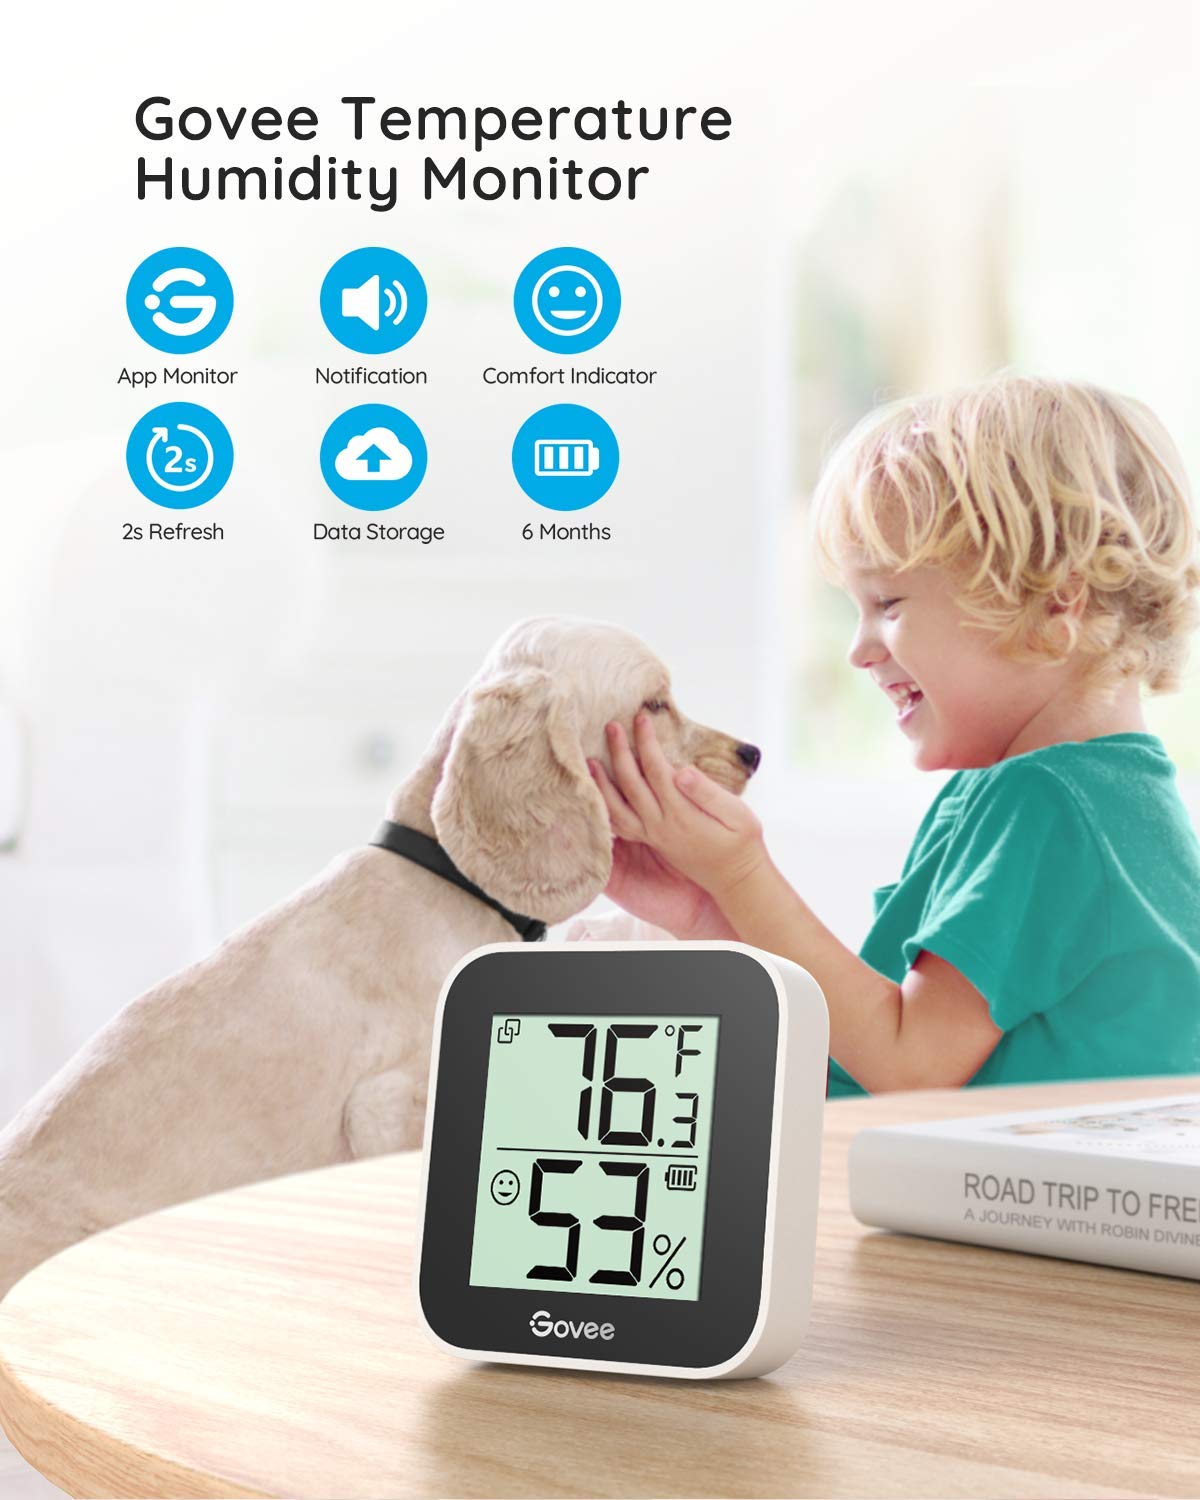 Govee Temperature Humidity Monitor